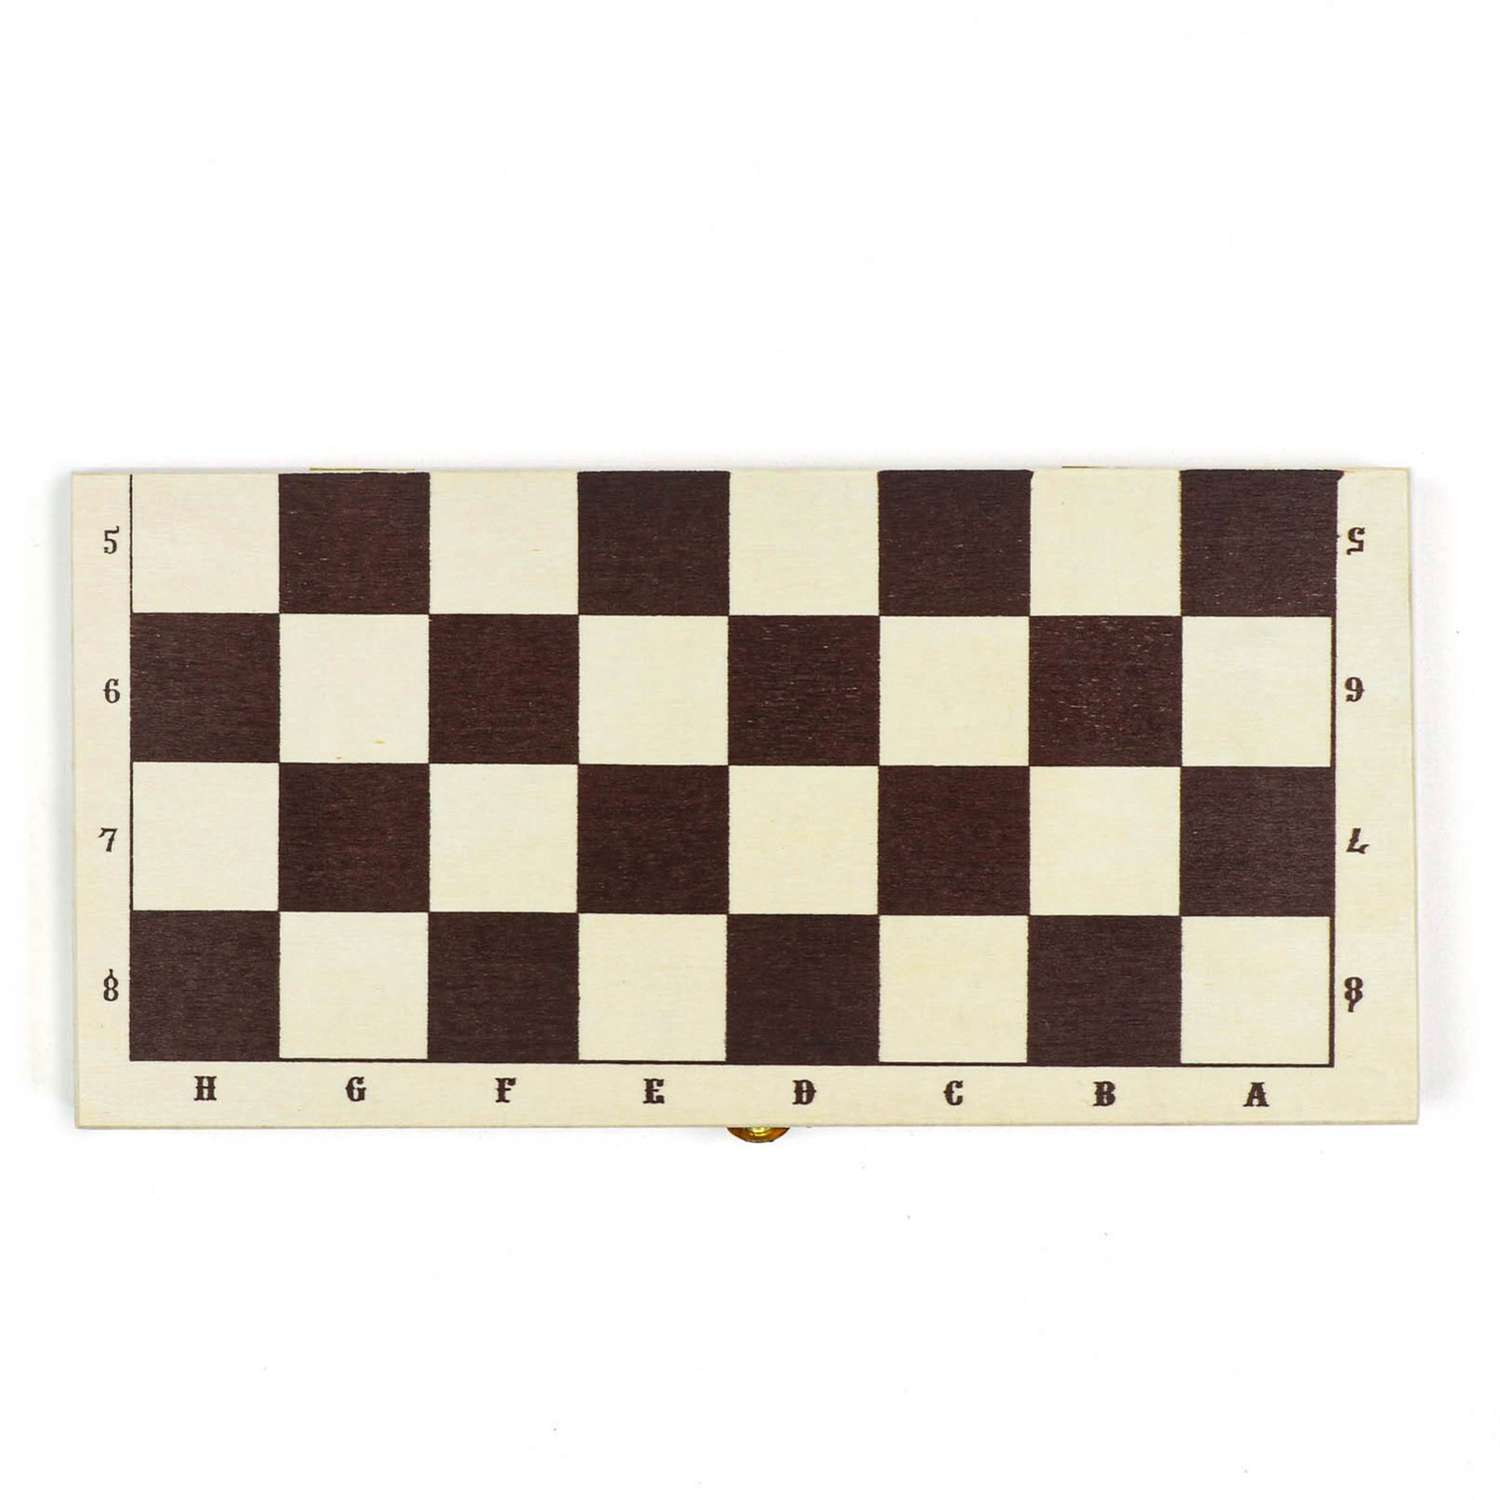 Шахматы Sima-Land «Классические» 30х30 см король h 7.8 см пешка h 3.5 см - фото 4